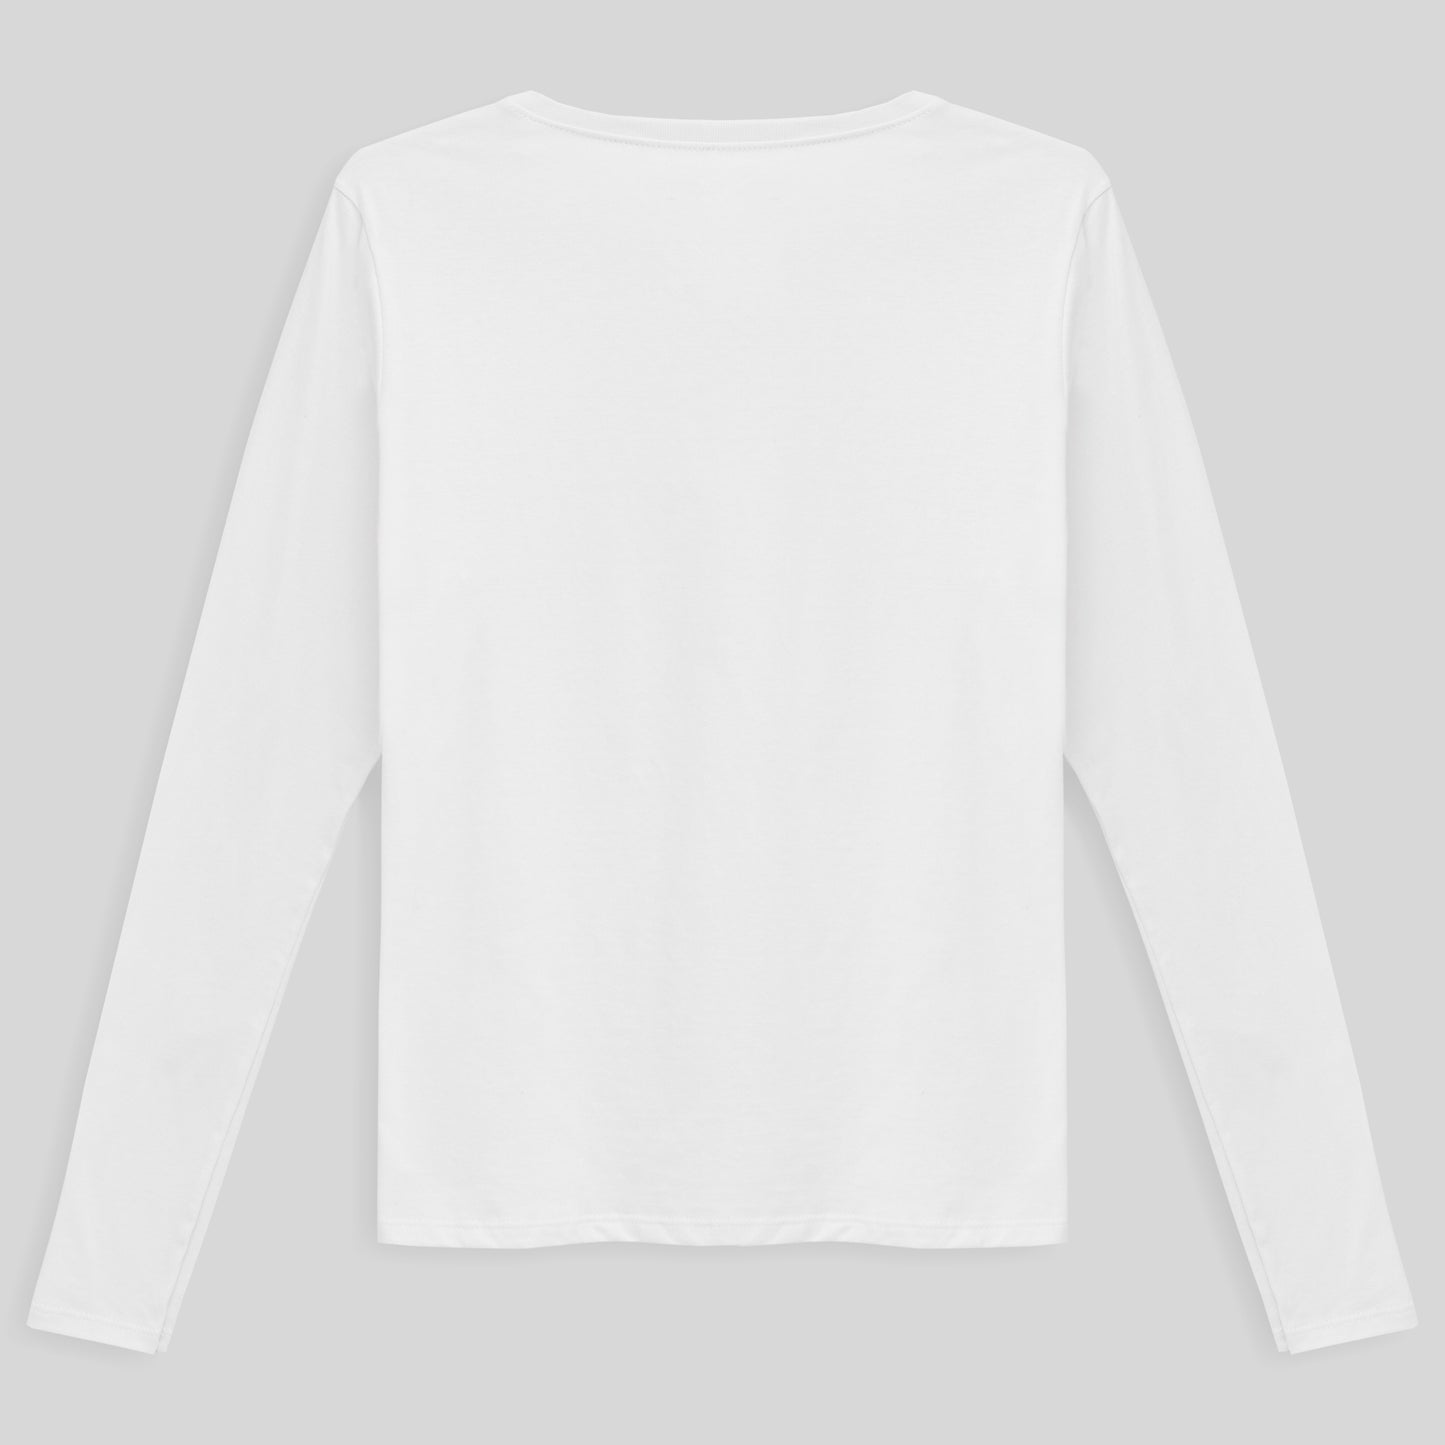 Camiseta Básica Manga Longa Gola V Feminina - Branco